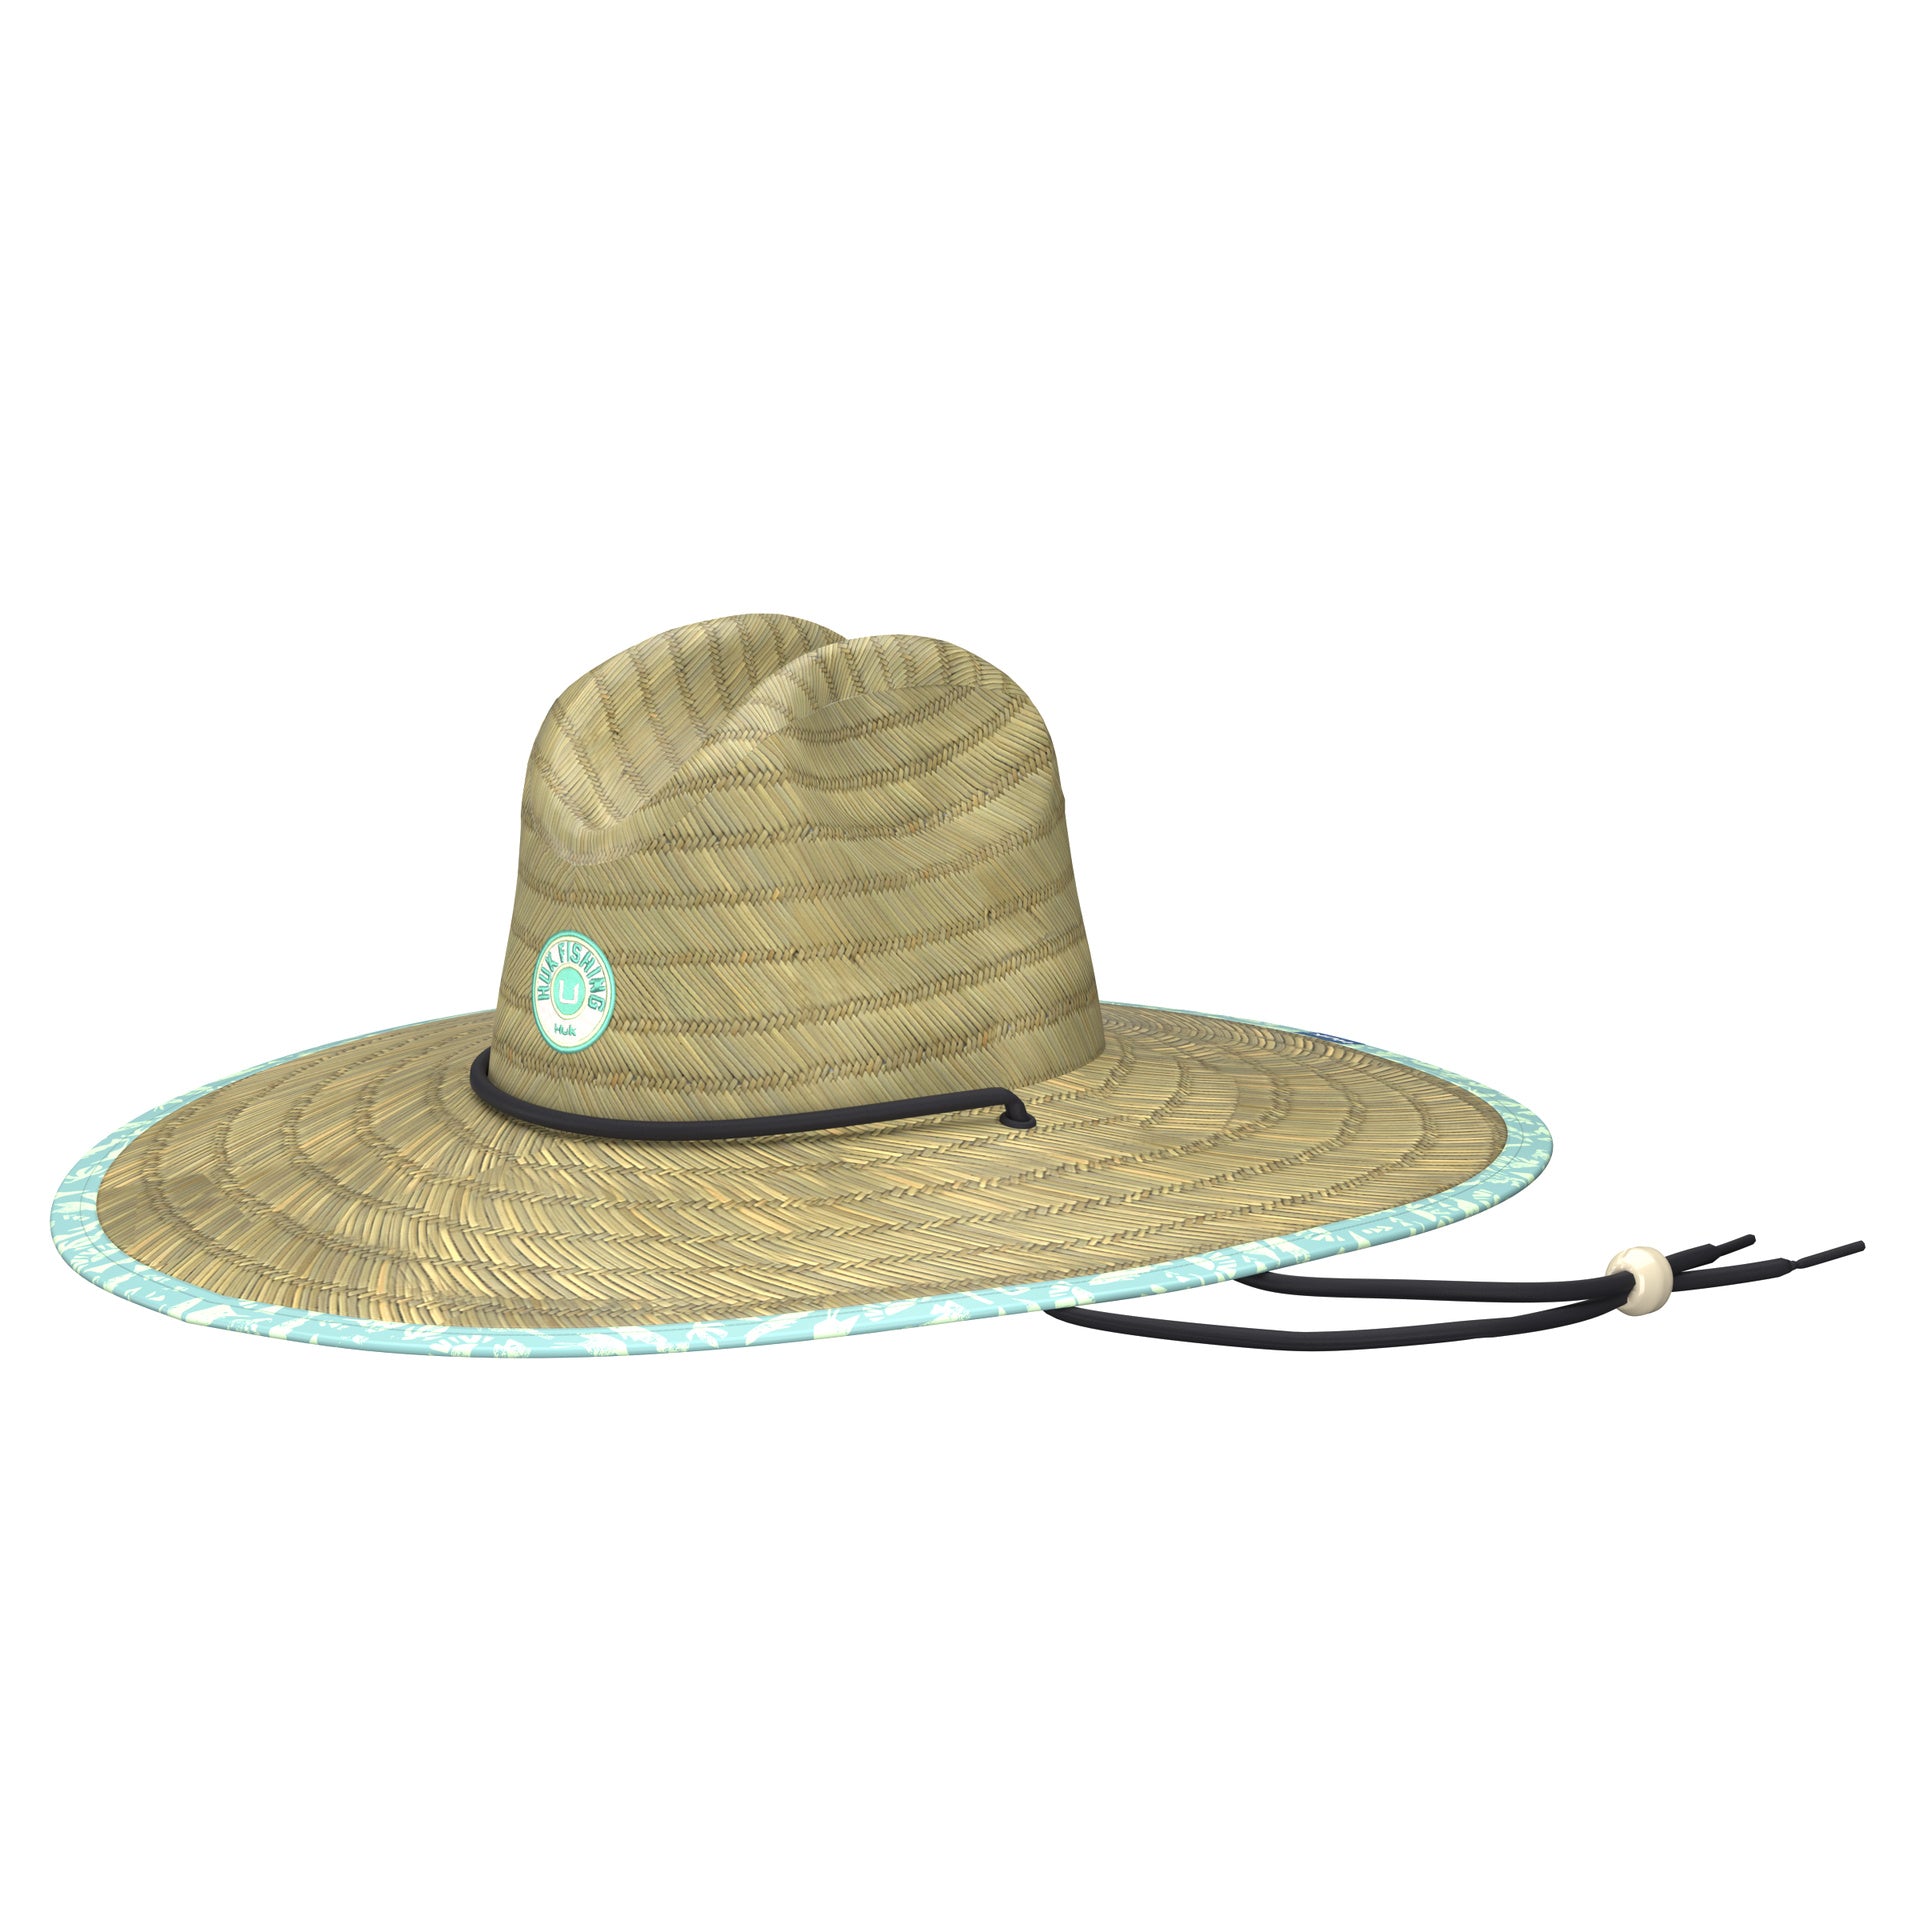 Huk, Accessories, Huk Straw Hat